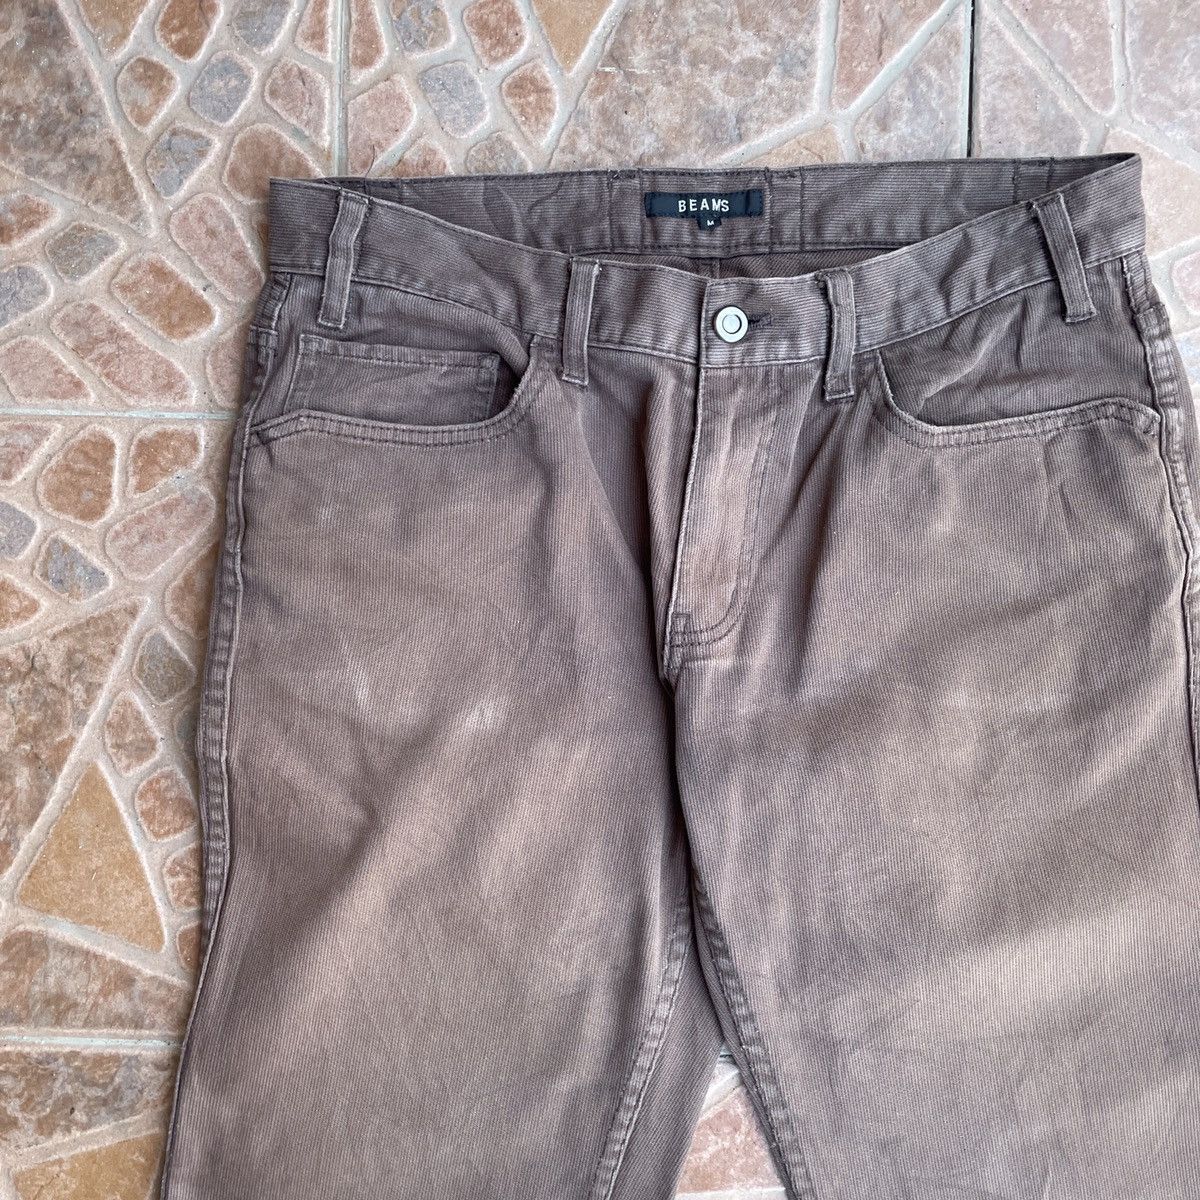 Beams Plus Vintage Beams Corduroy Distressed Casual Pants Size US 32 / EU 48 - 3 Thumbnail